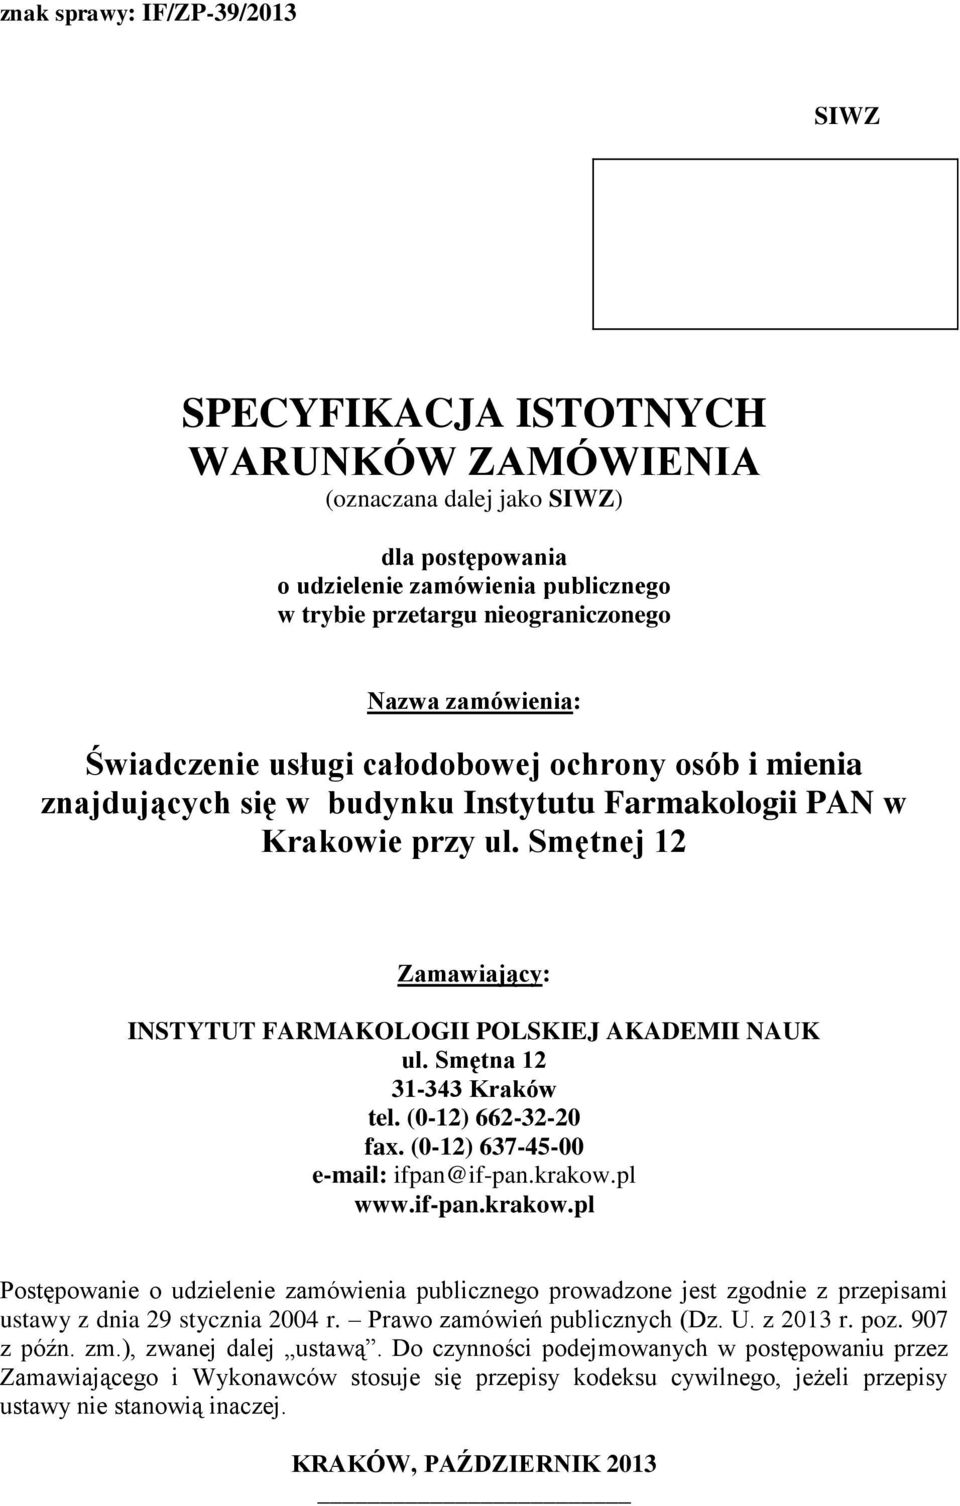 Smętna 12 31-343 Kraków tel. (0-12) 662-32-20 fax. (0-12) 637-45-00 e-mail: ifpan@if-pan.krakow.